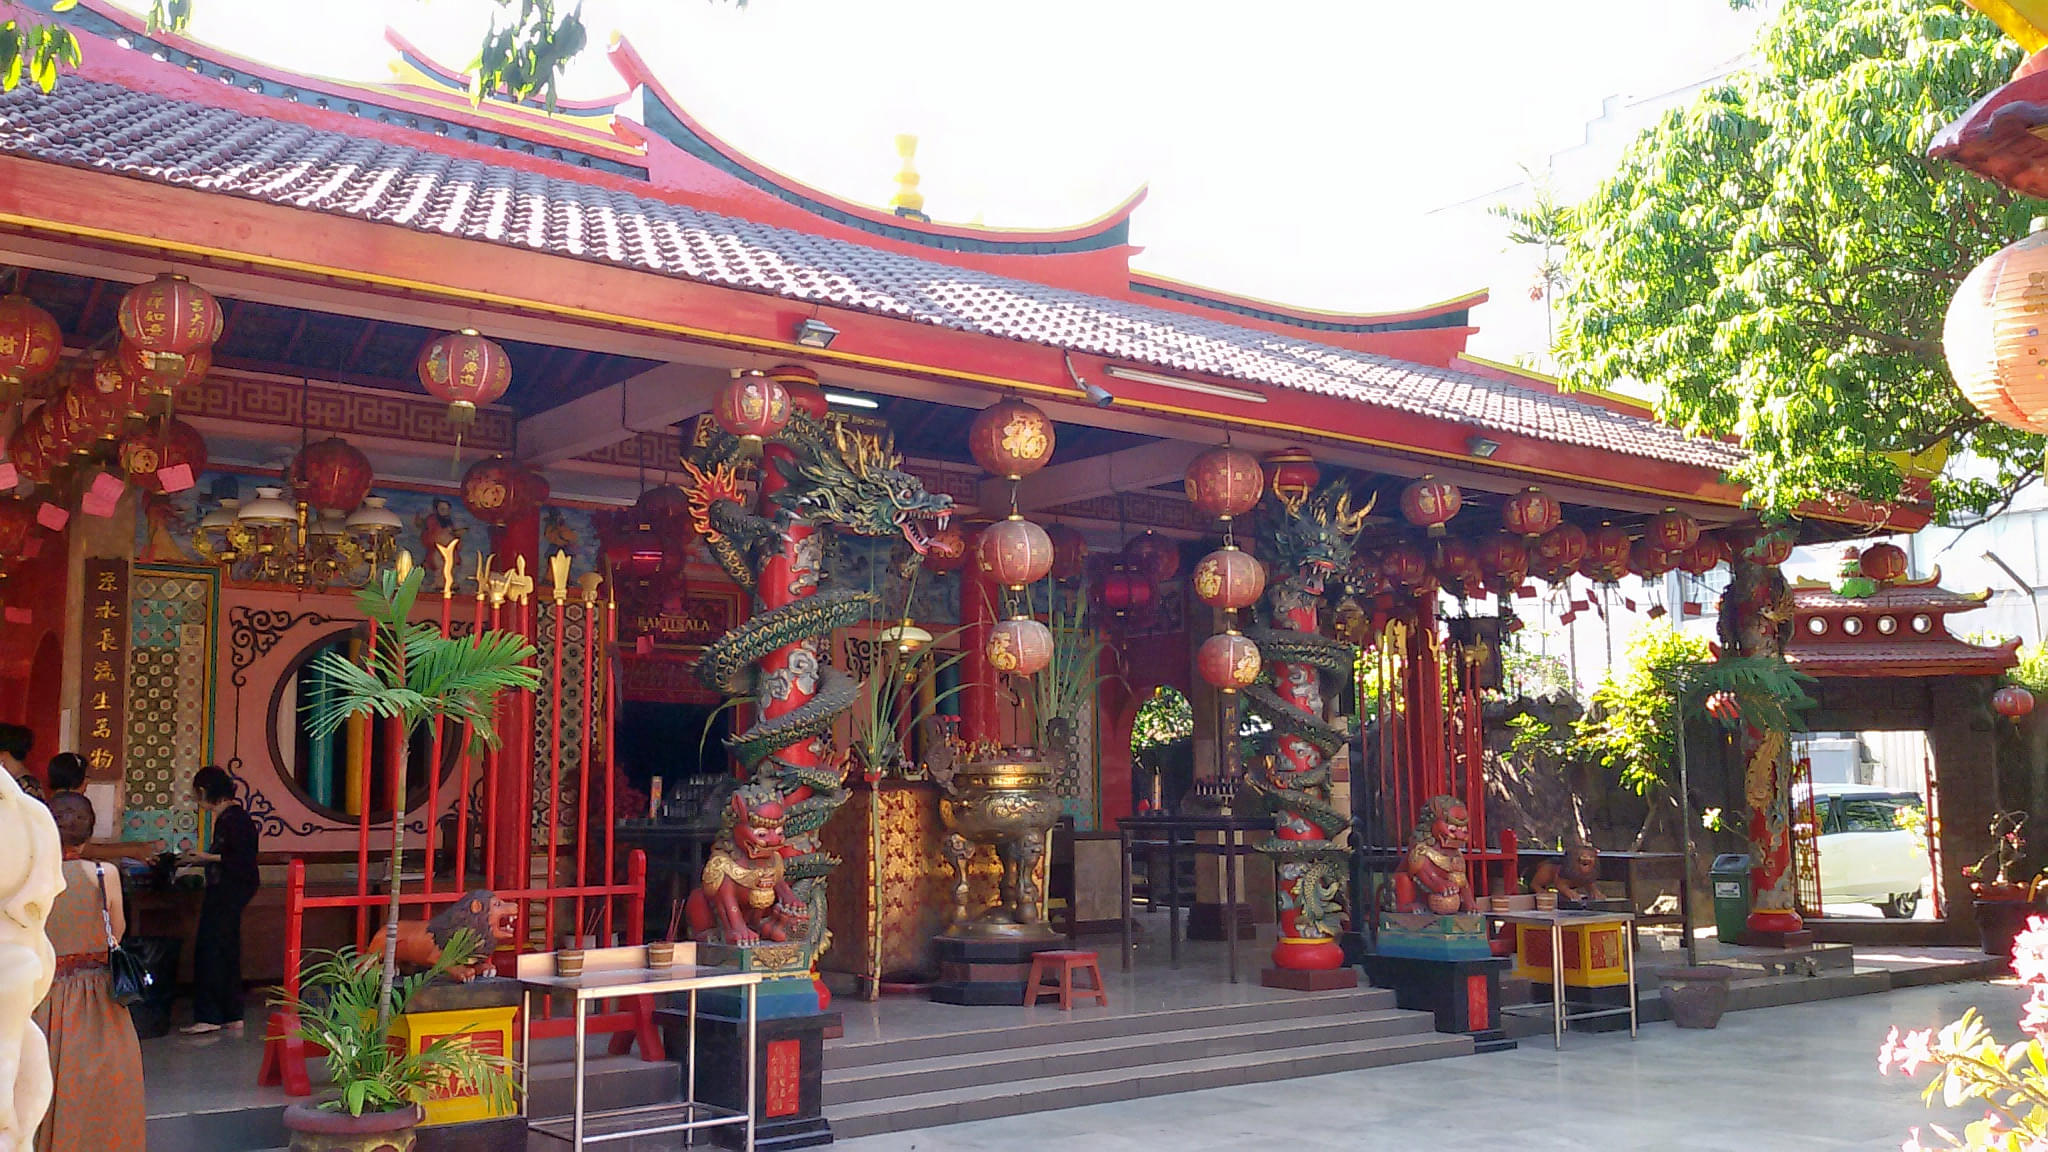 Vihara Dharmayana Temple Overview